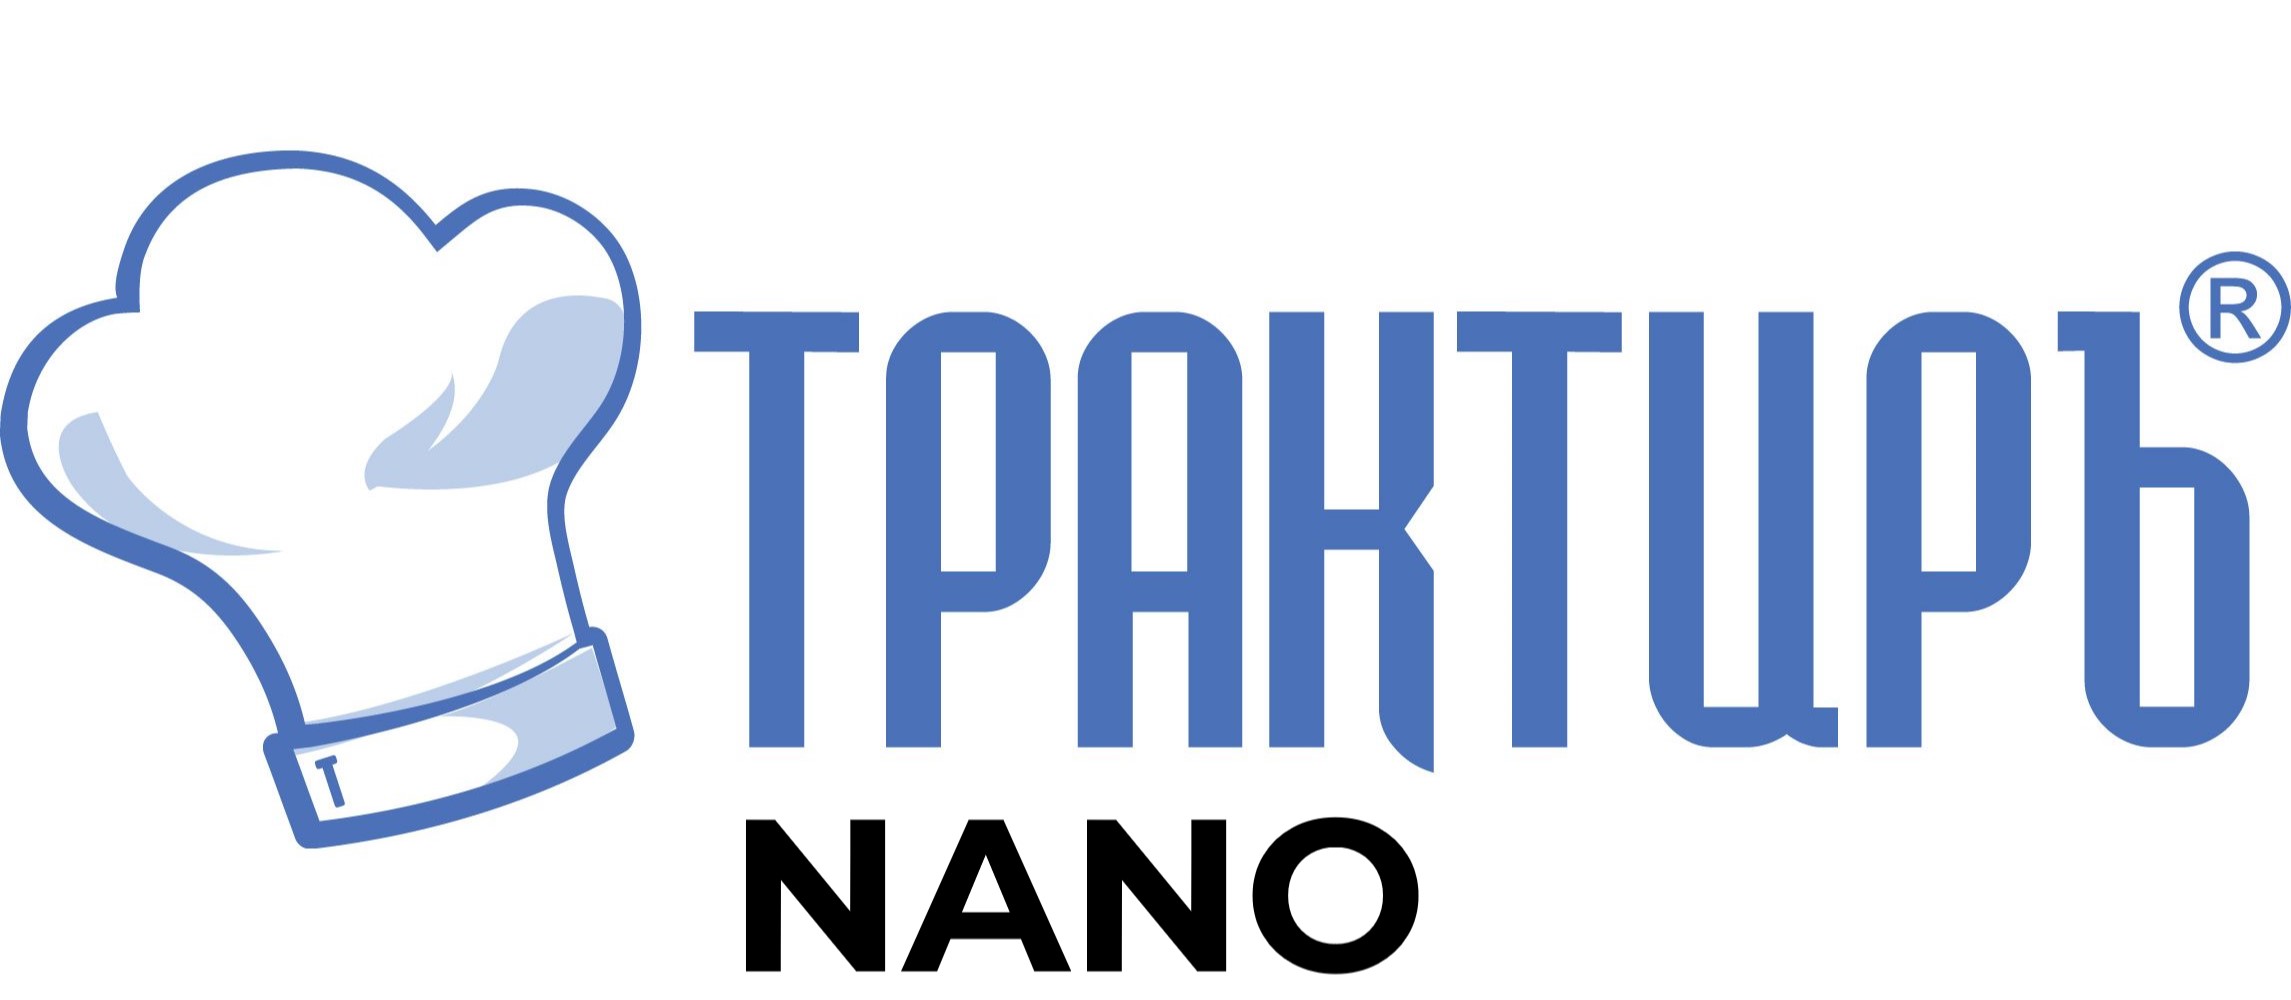 Конфигурация Трактиръ: Nano (Основная поставка) во Владикавказе